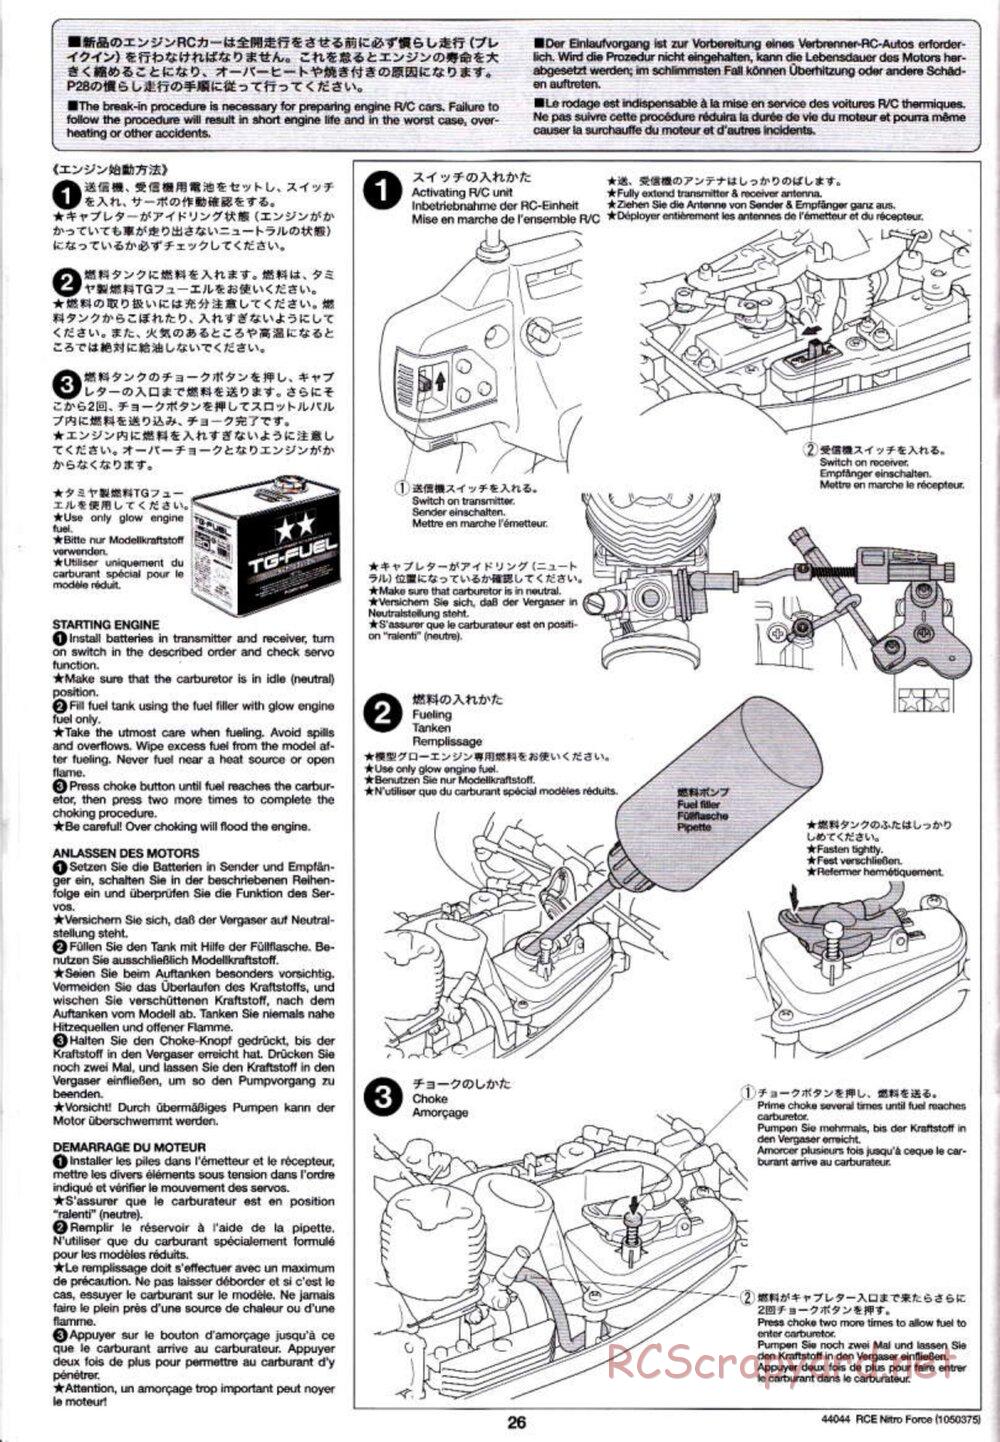 Tamiya - Nitro Force - NDF-01 Chassis - Manual - Page 26